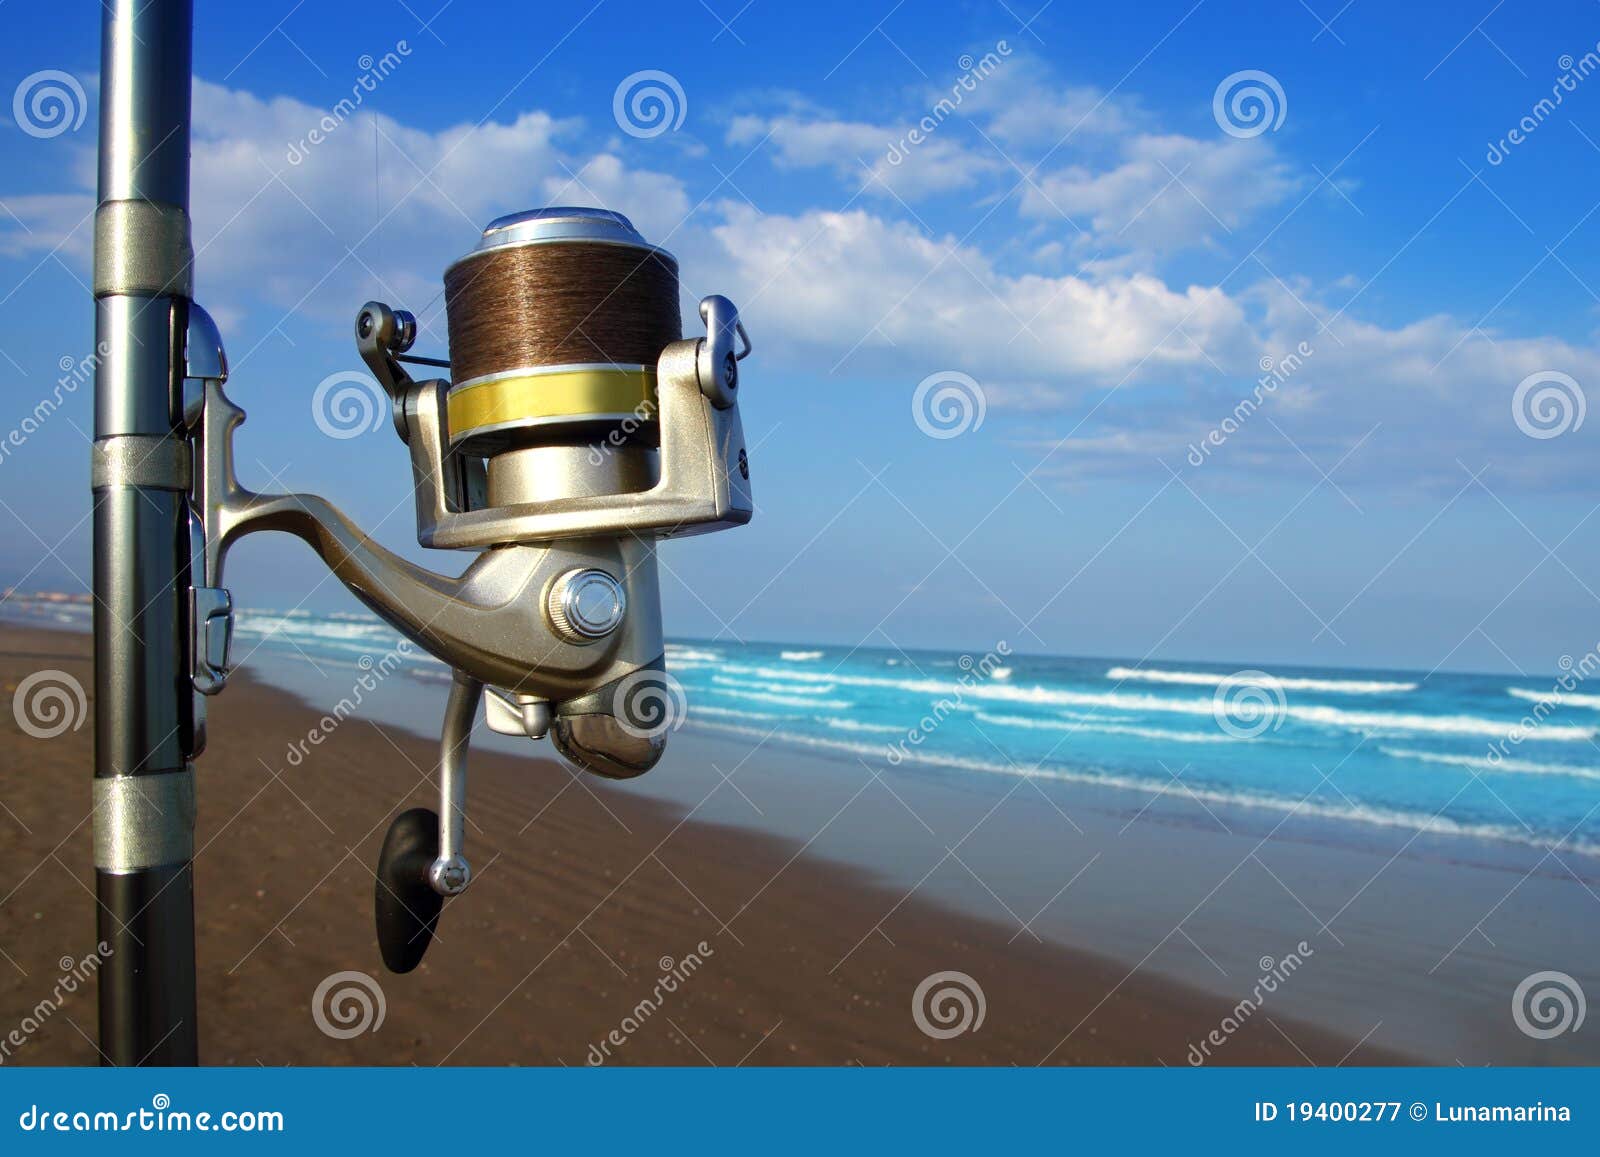 https://thumbs.dreamstime.com/z/beach-surfcasting-spinning-fishing-reel-rod-19400277.jpg